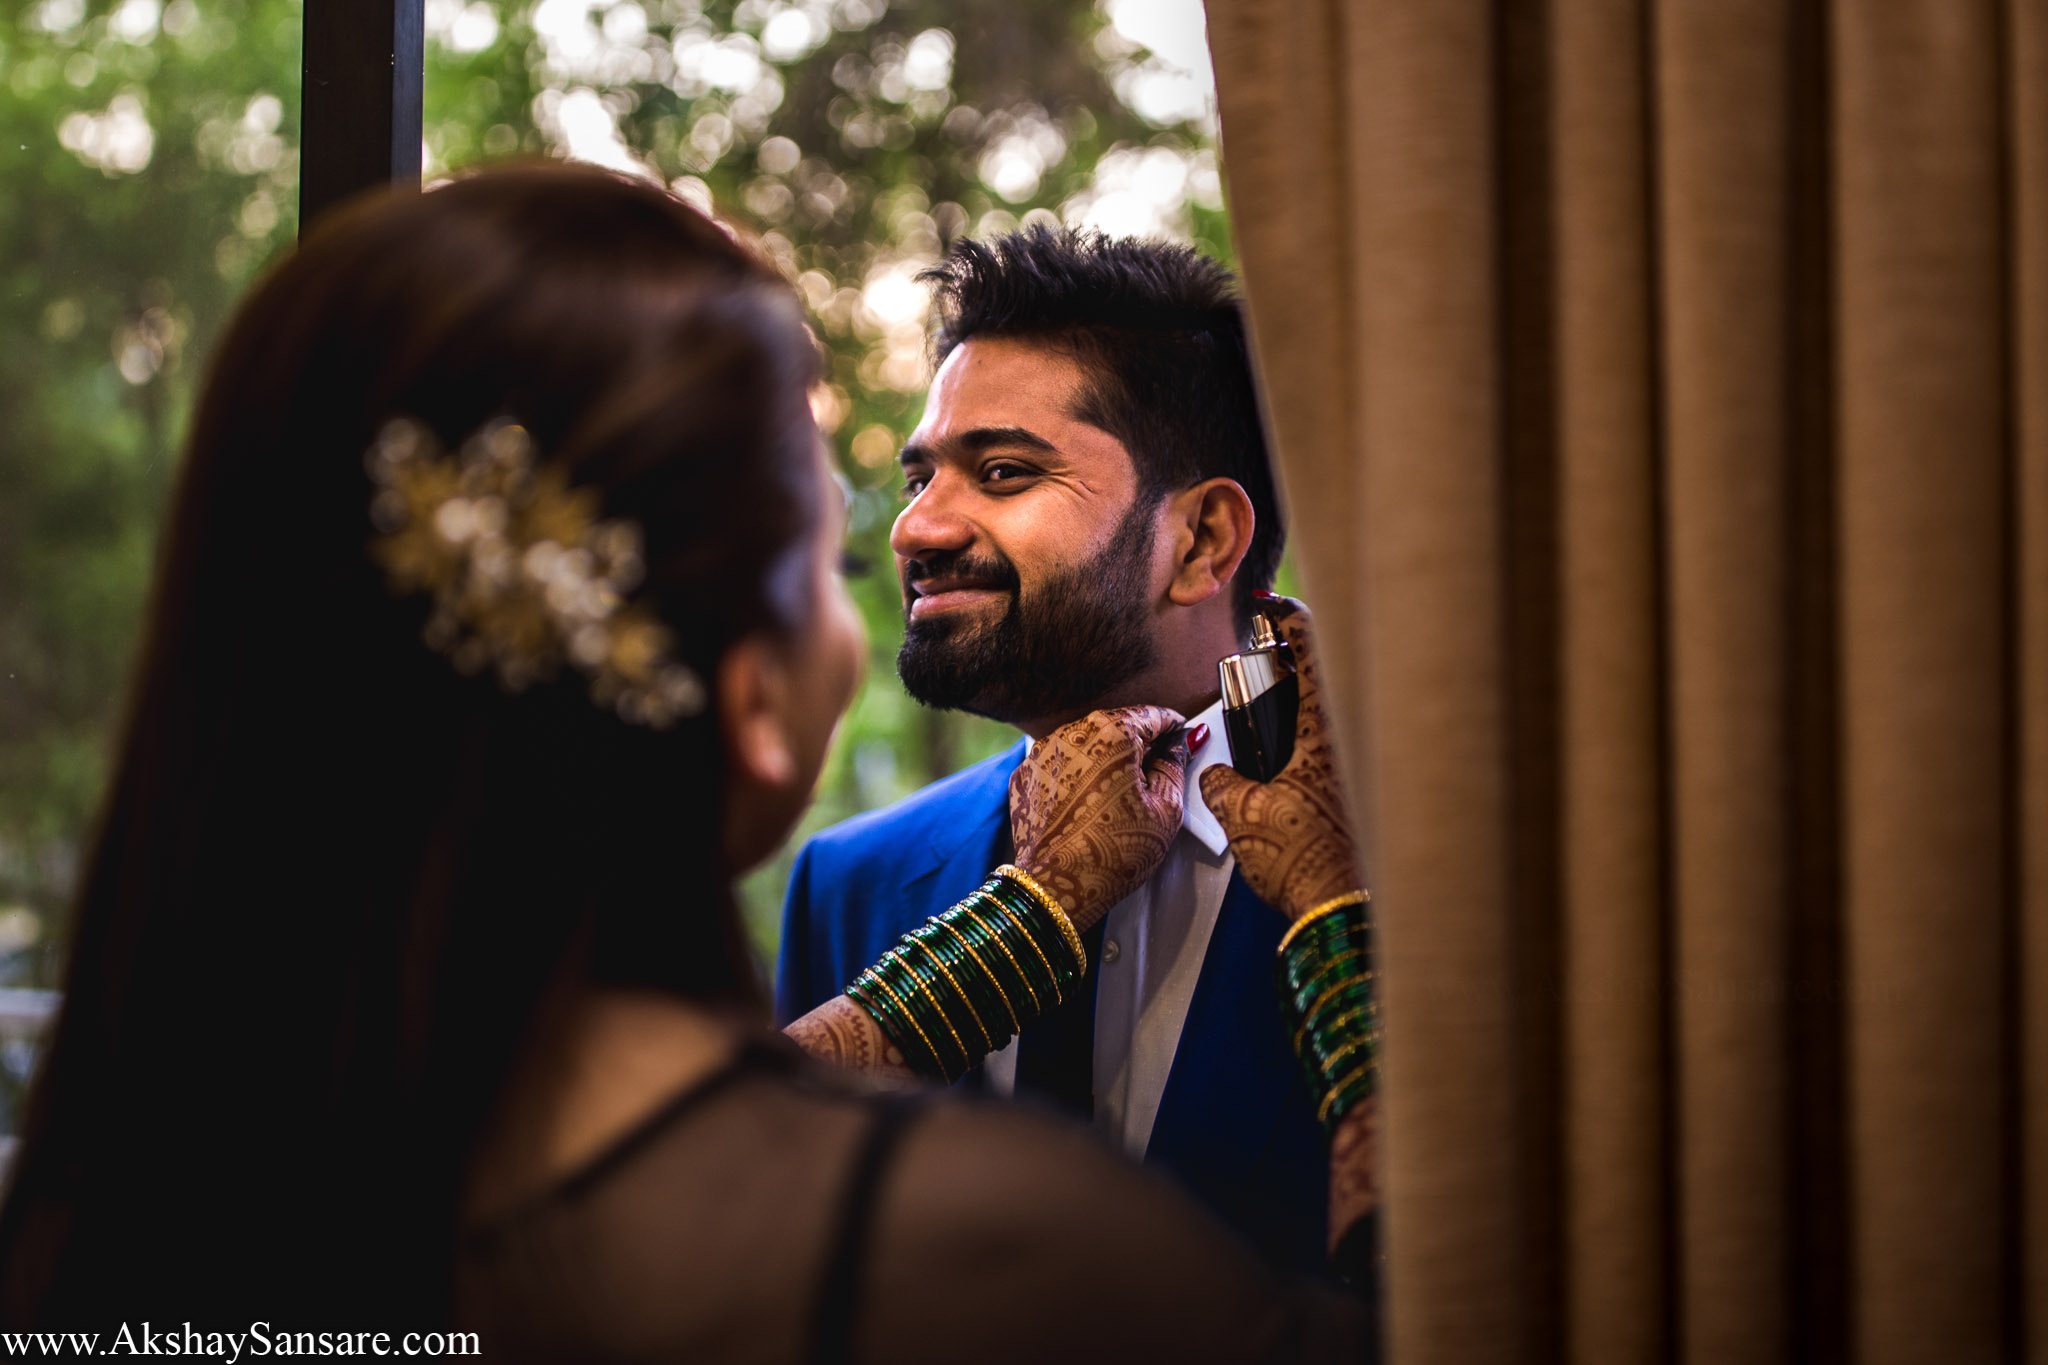 Ajay & Devika Akshay Sansare Photography Best Candid wedding photographer in mumbai india25.jpg